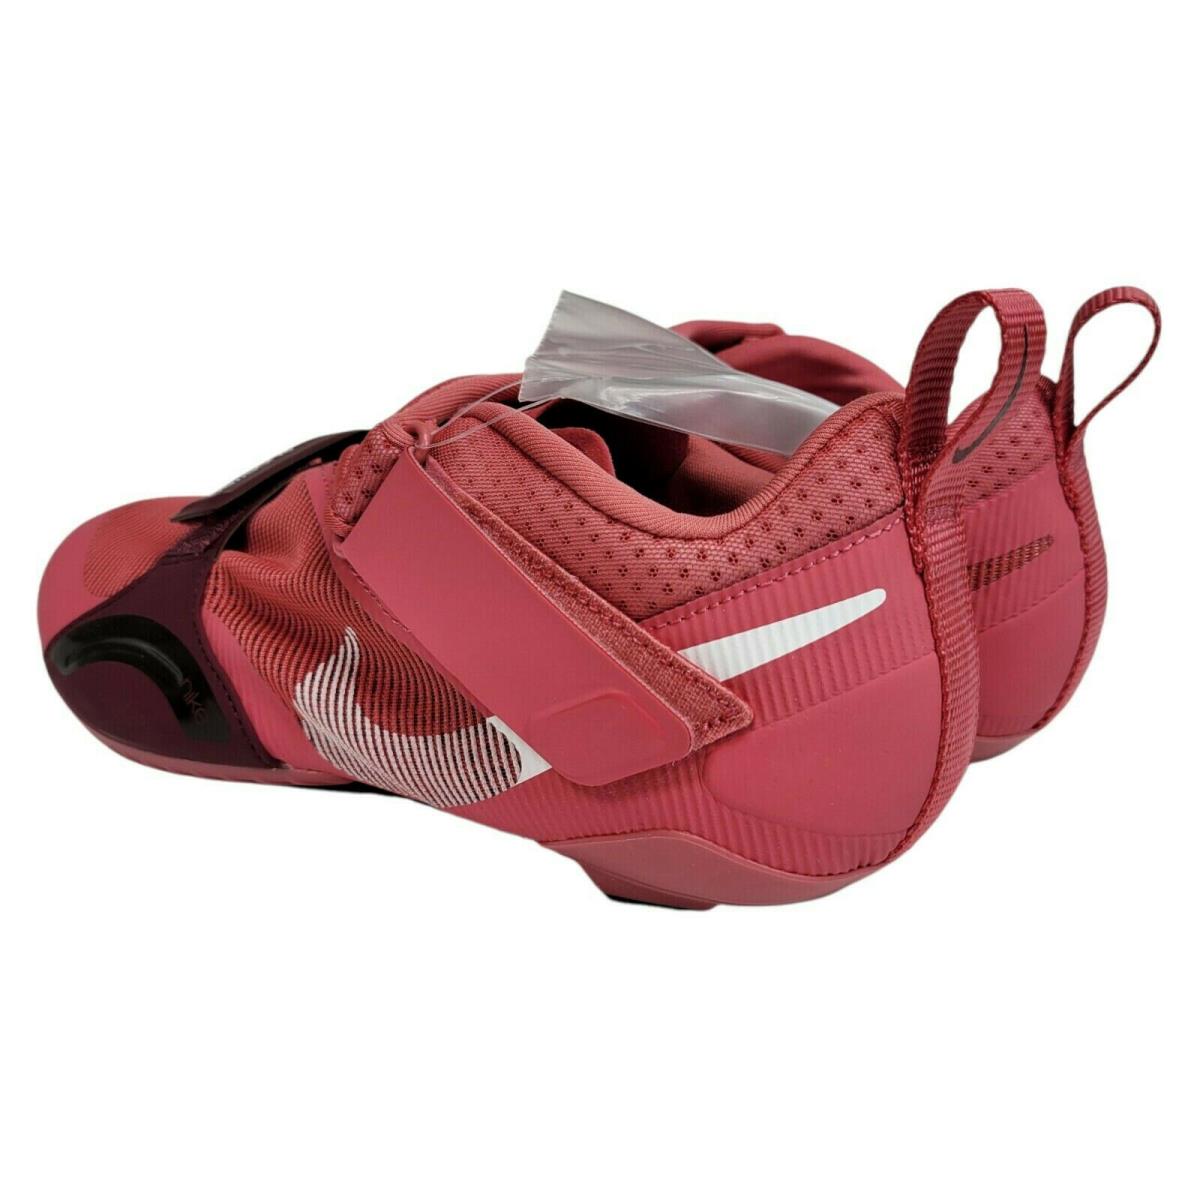 Nike shoes SuperRep Cycle - Pink 3